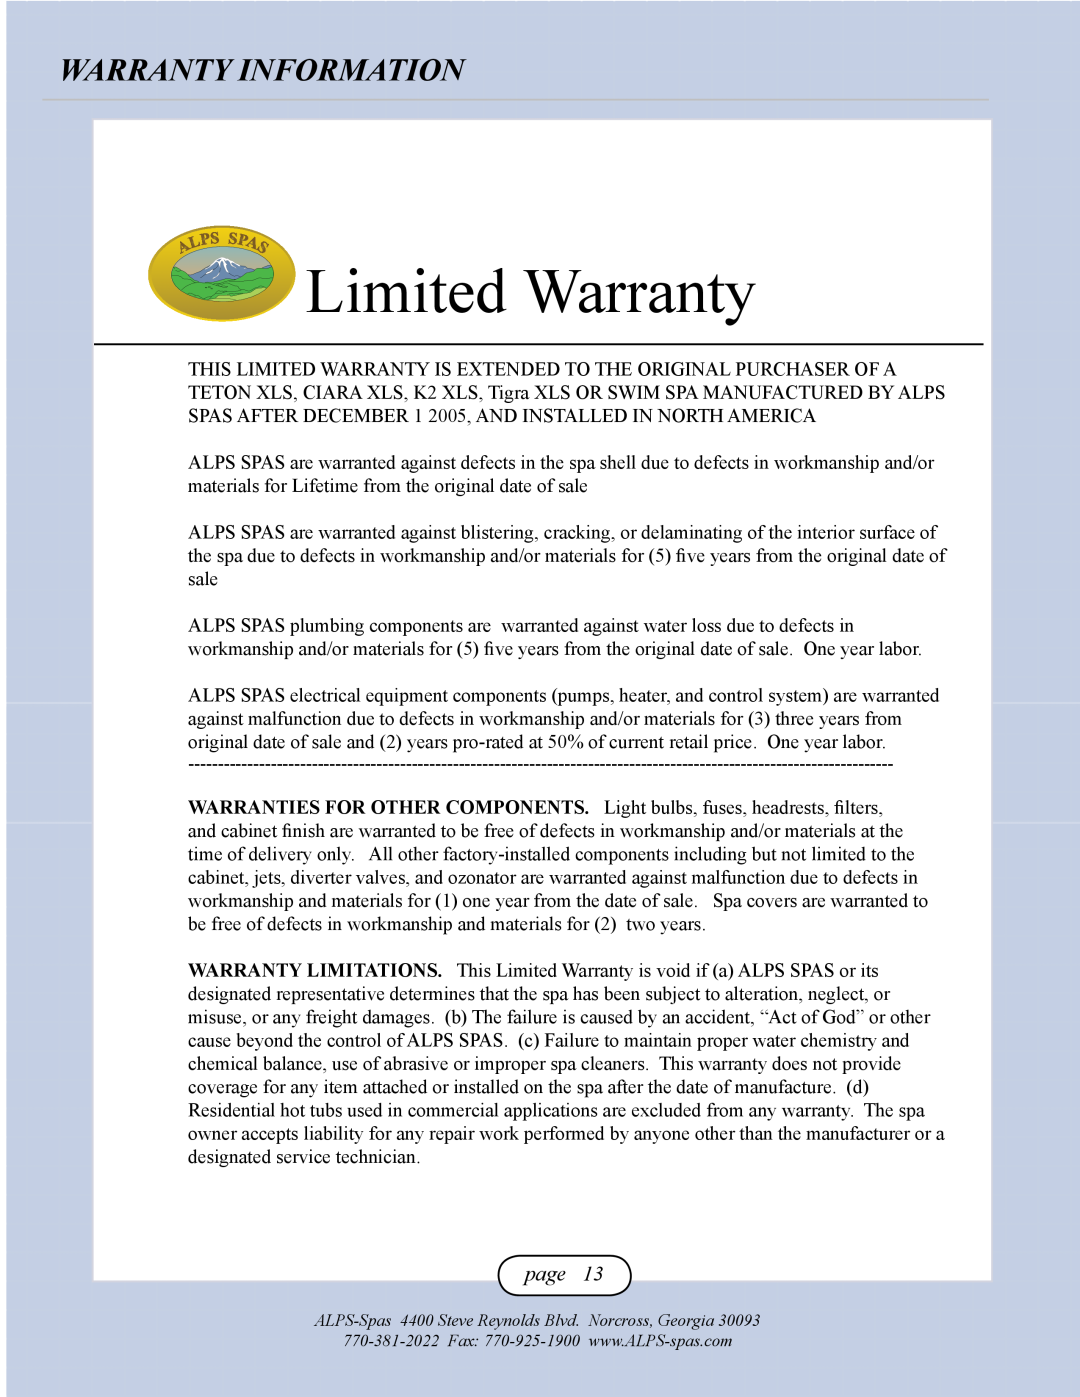 Alps Electric Teton XLS, Ciara XLS, Tigra XLS owner manual Warranty Information, Limited Warranty, page 